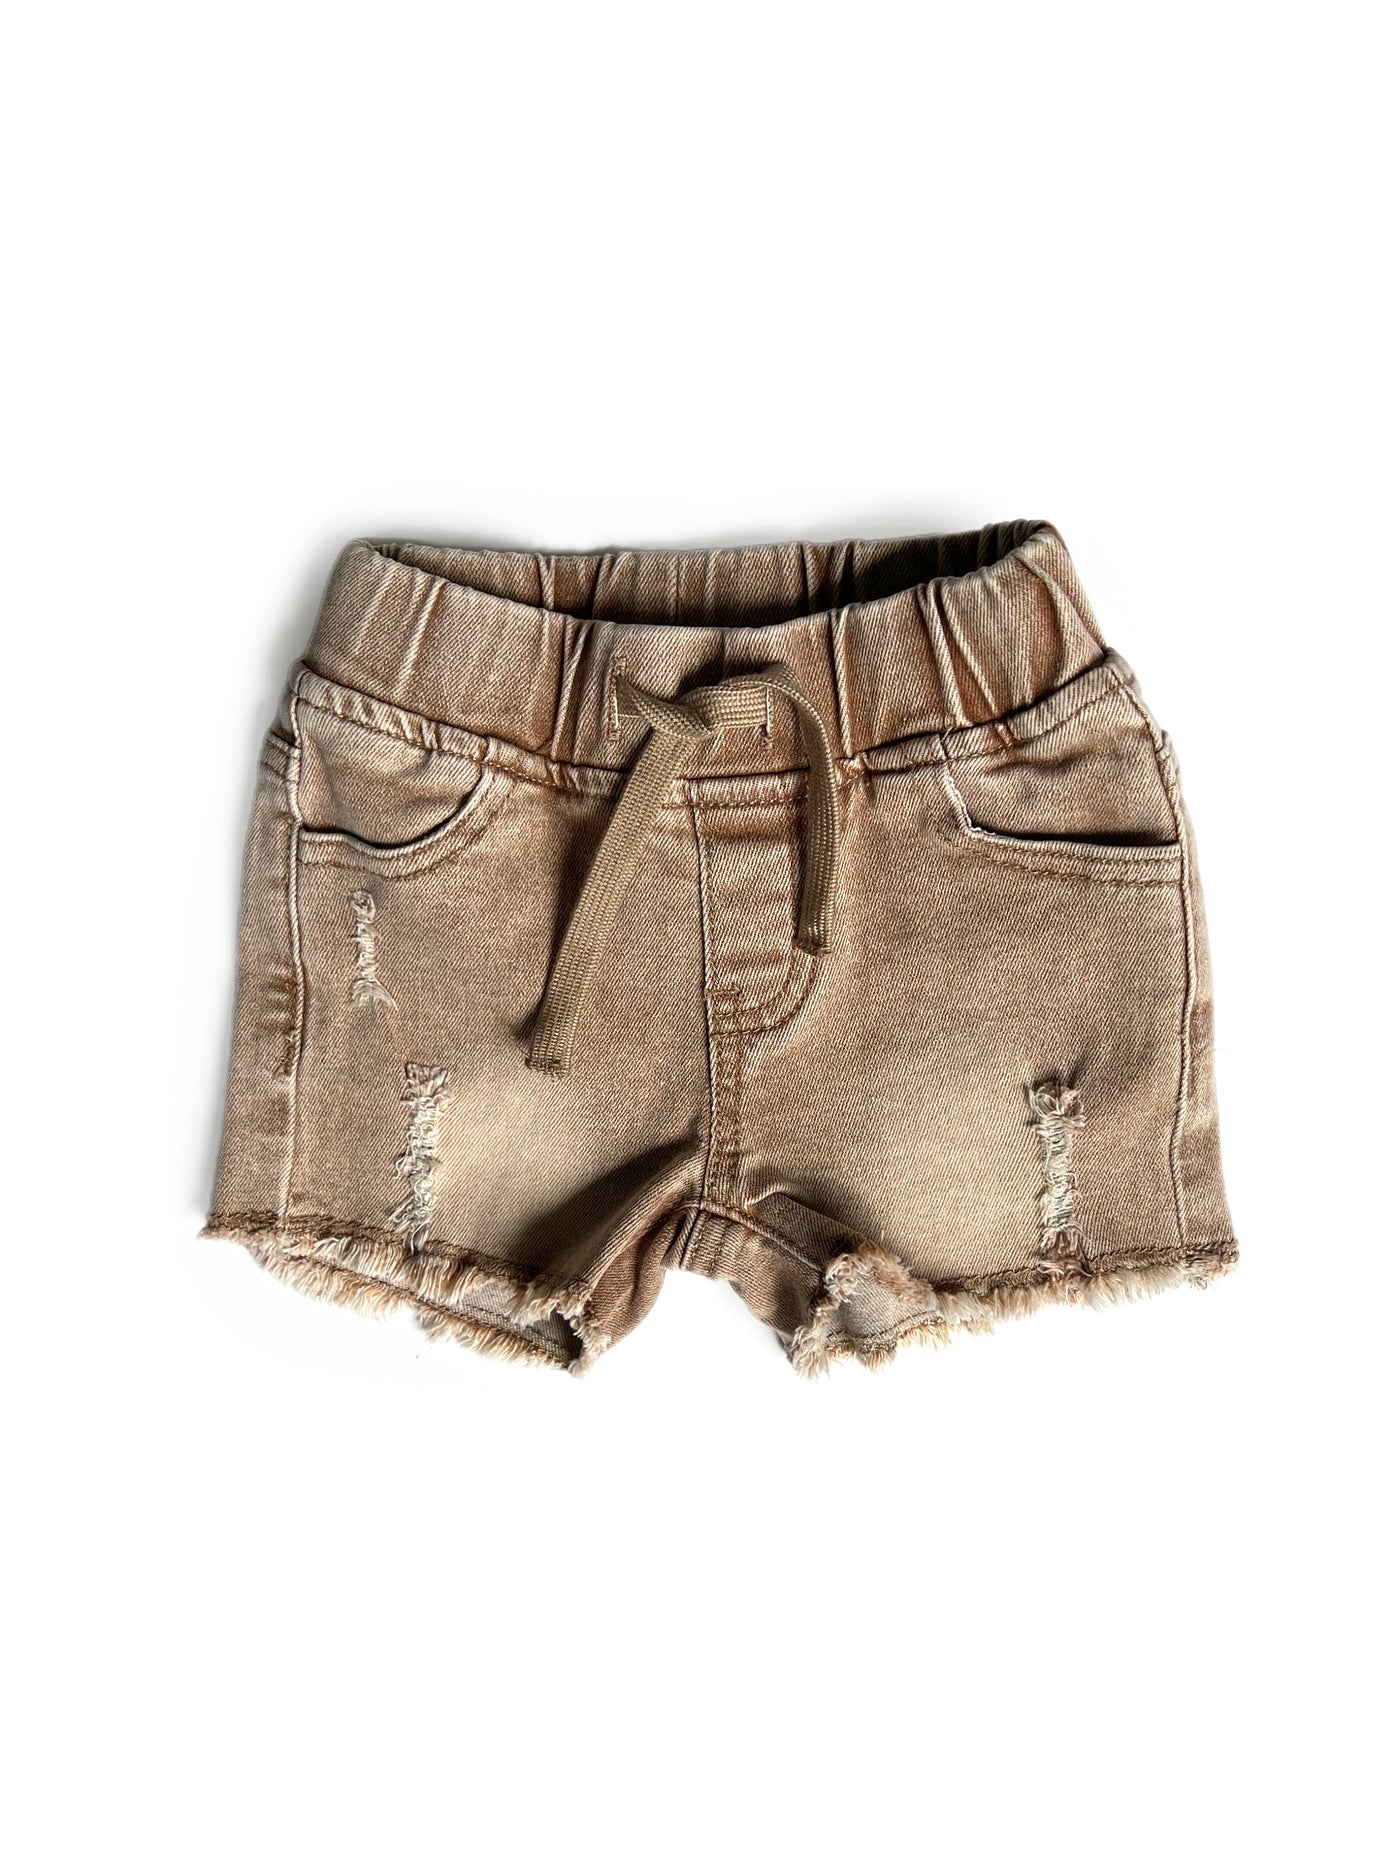 Little Bipsy Cut Off Denim Shorts: Camel Wash